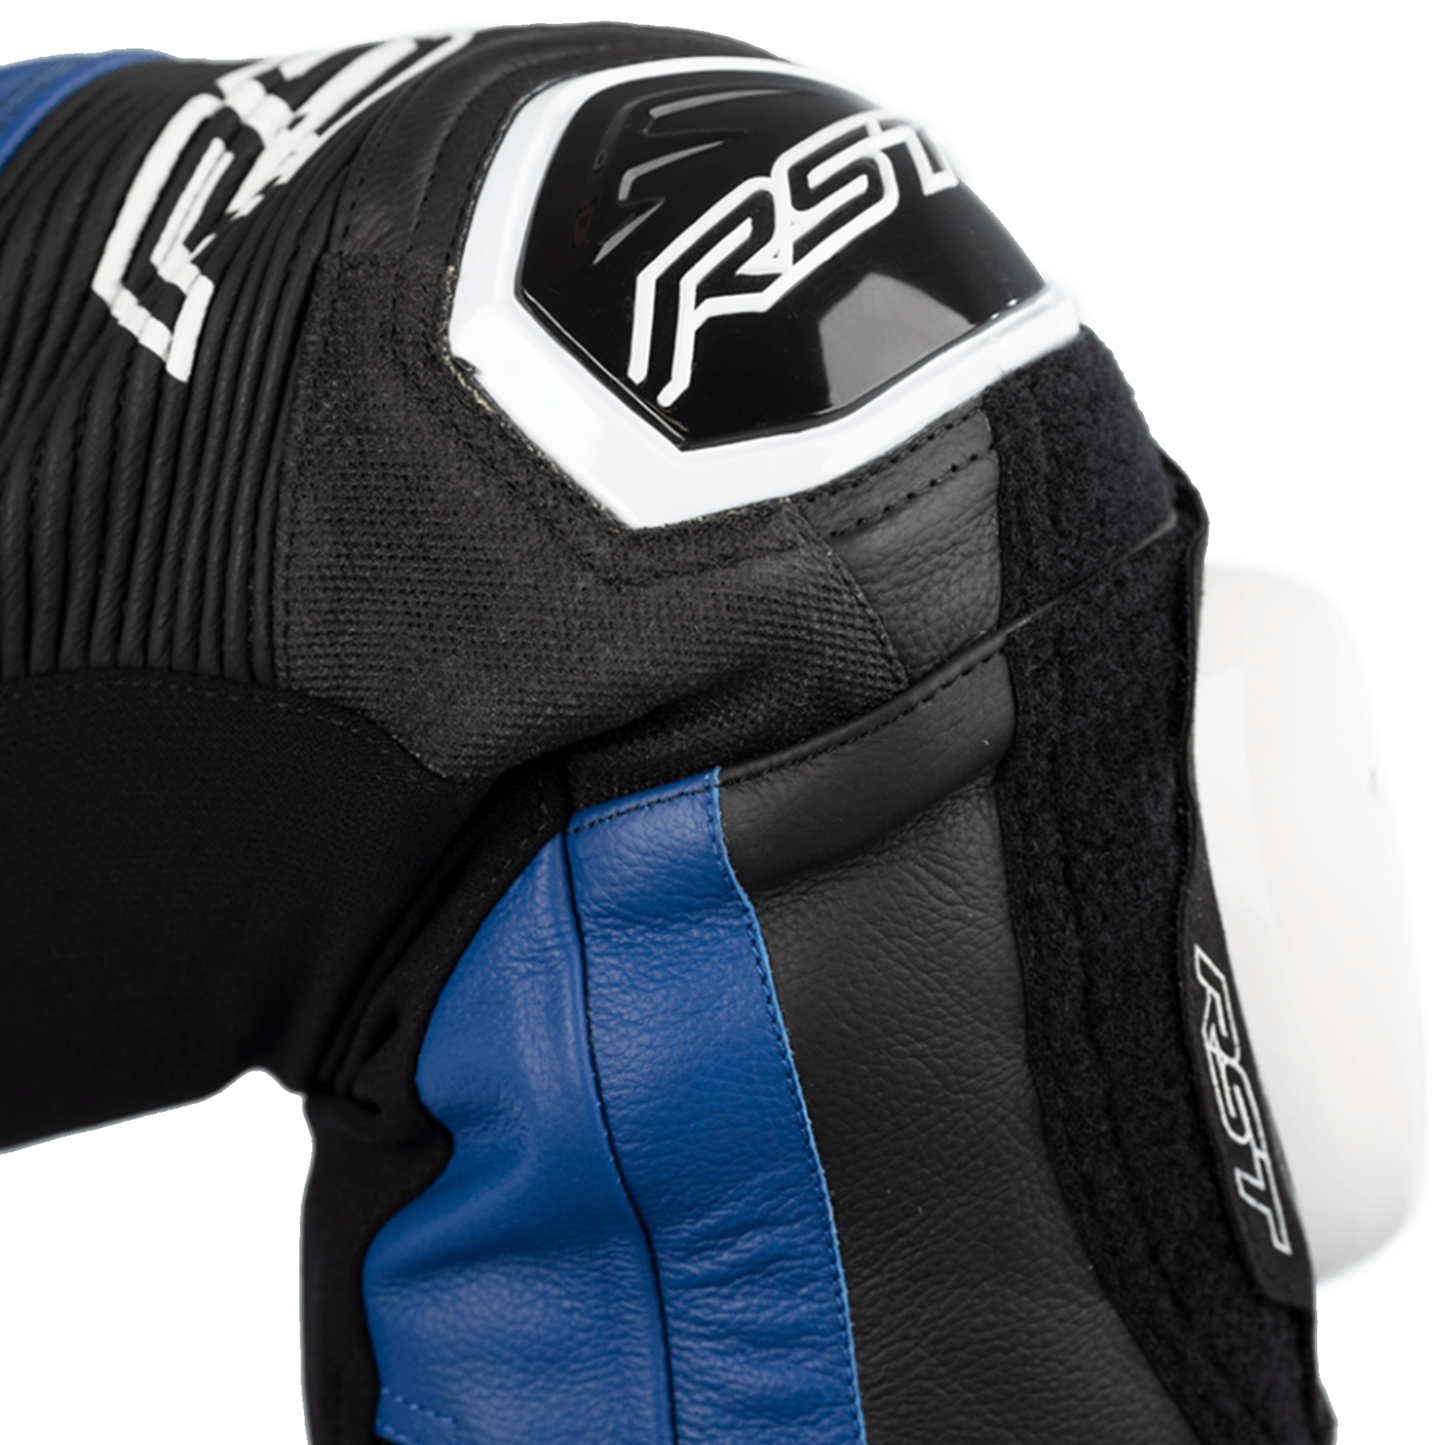 RST Pro Series Evo Airbag Men's Leather Suit - Black/White/Blue